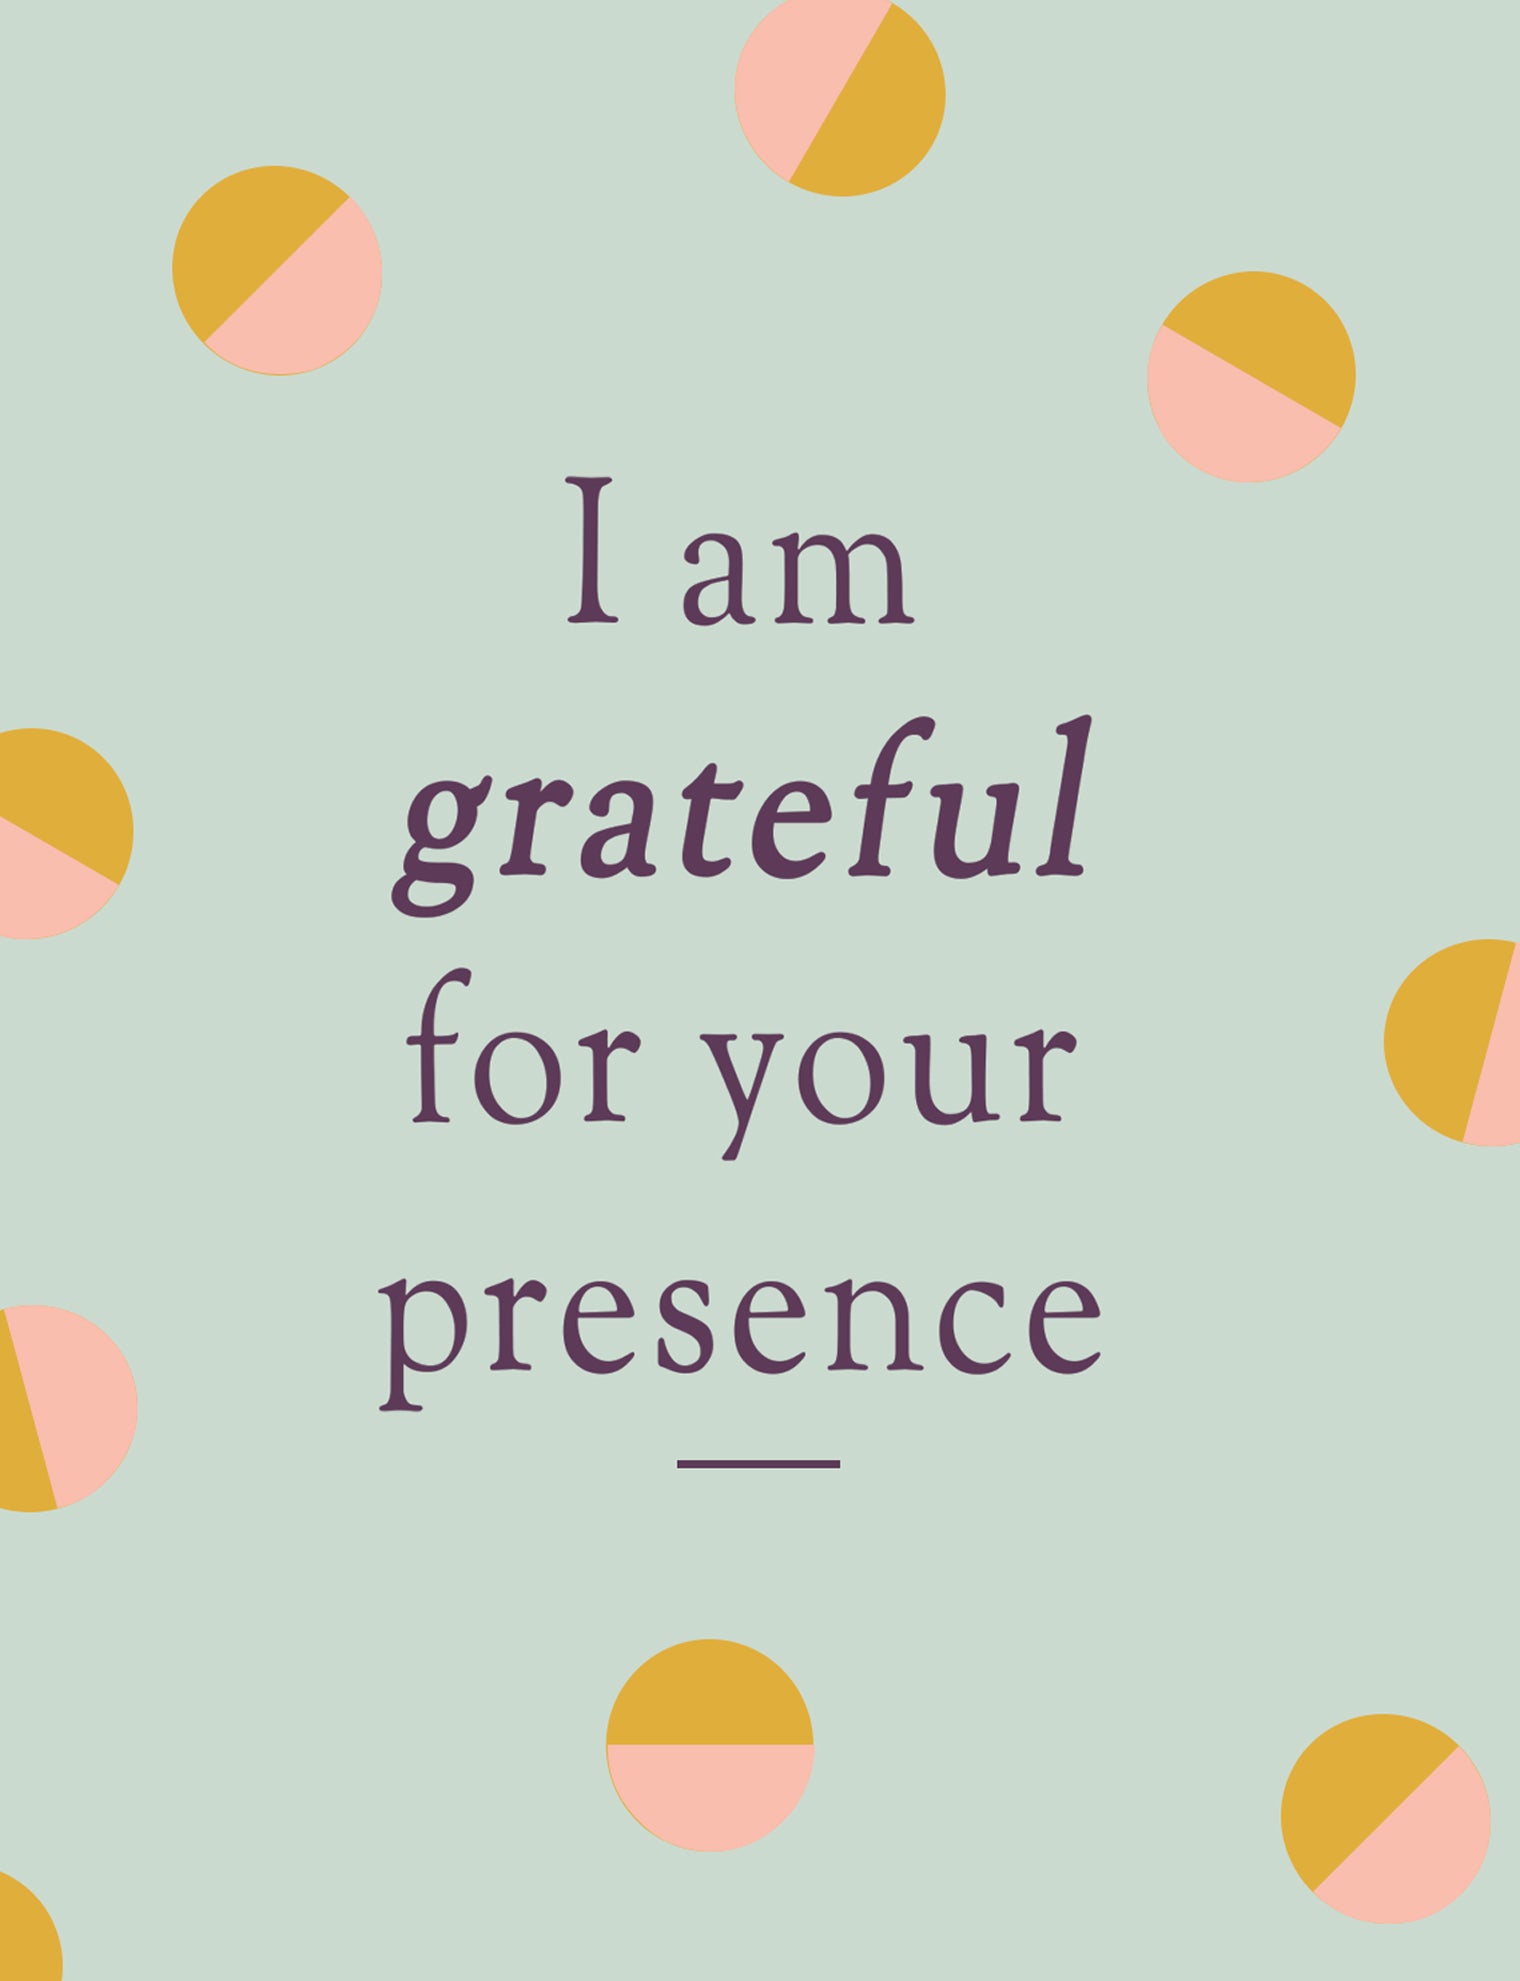 Grateful Greeting Card